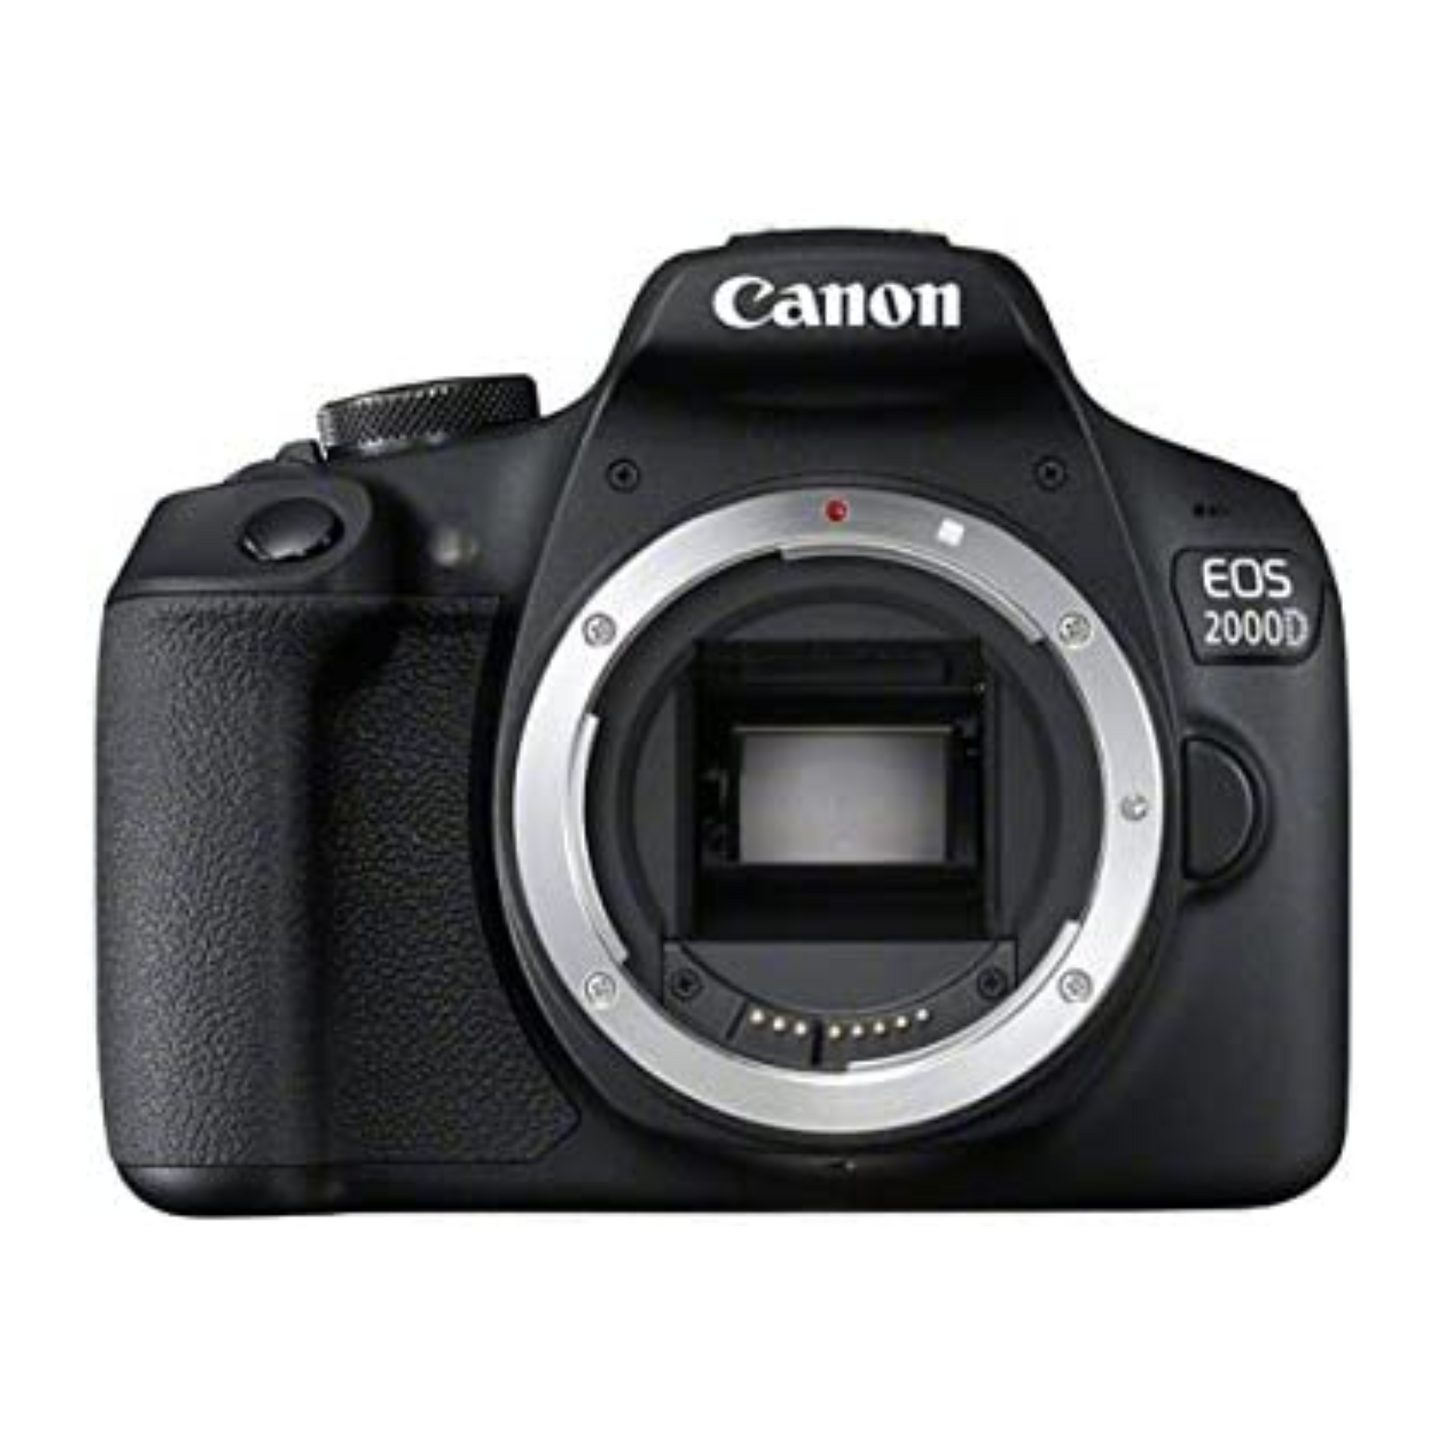 Canon EOS 2000D DSLR Camera with 18-55mm Lens Kit, Black